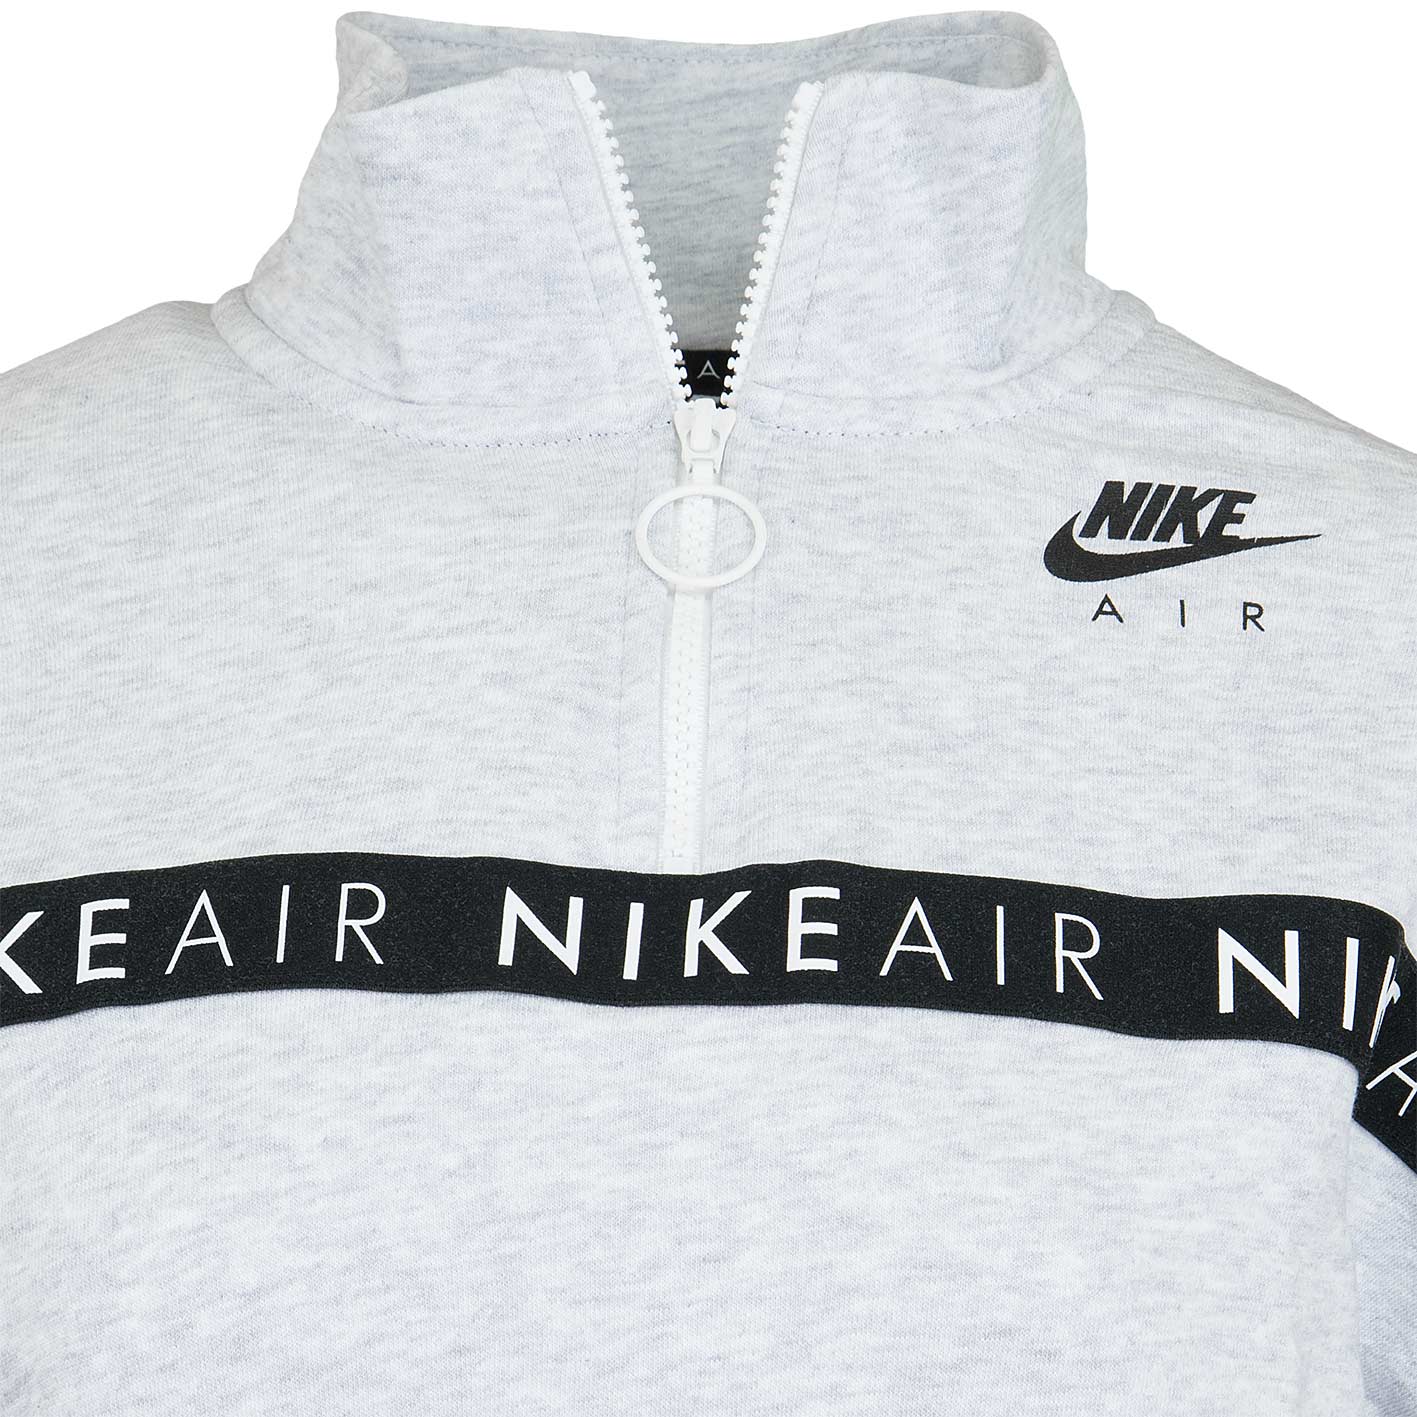 ☆ Nike Damen Sweatshirt Air HZ hell grau - hier bestellen!